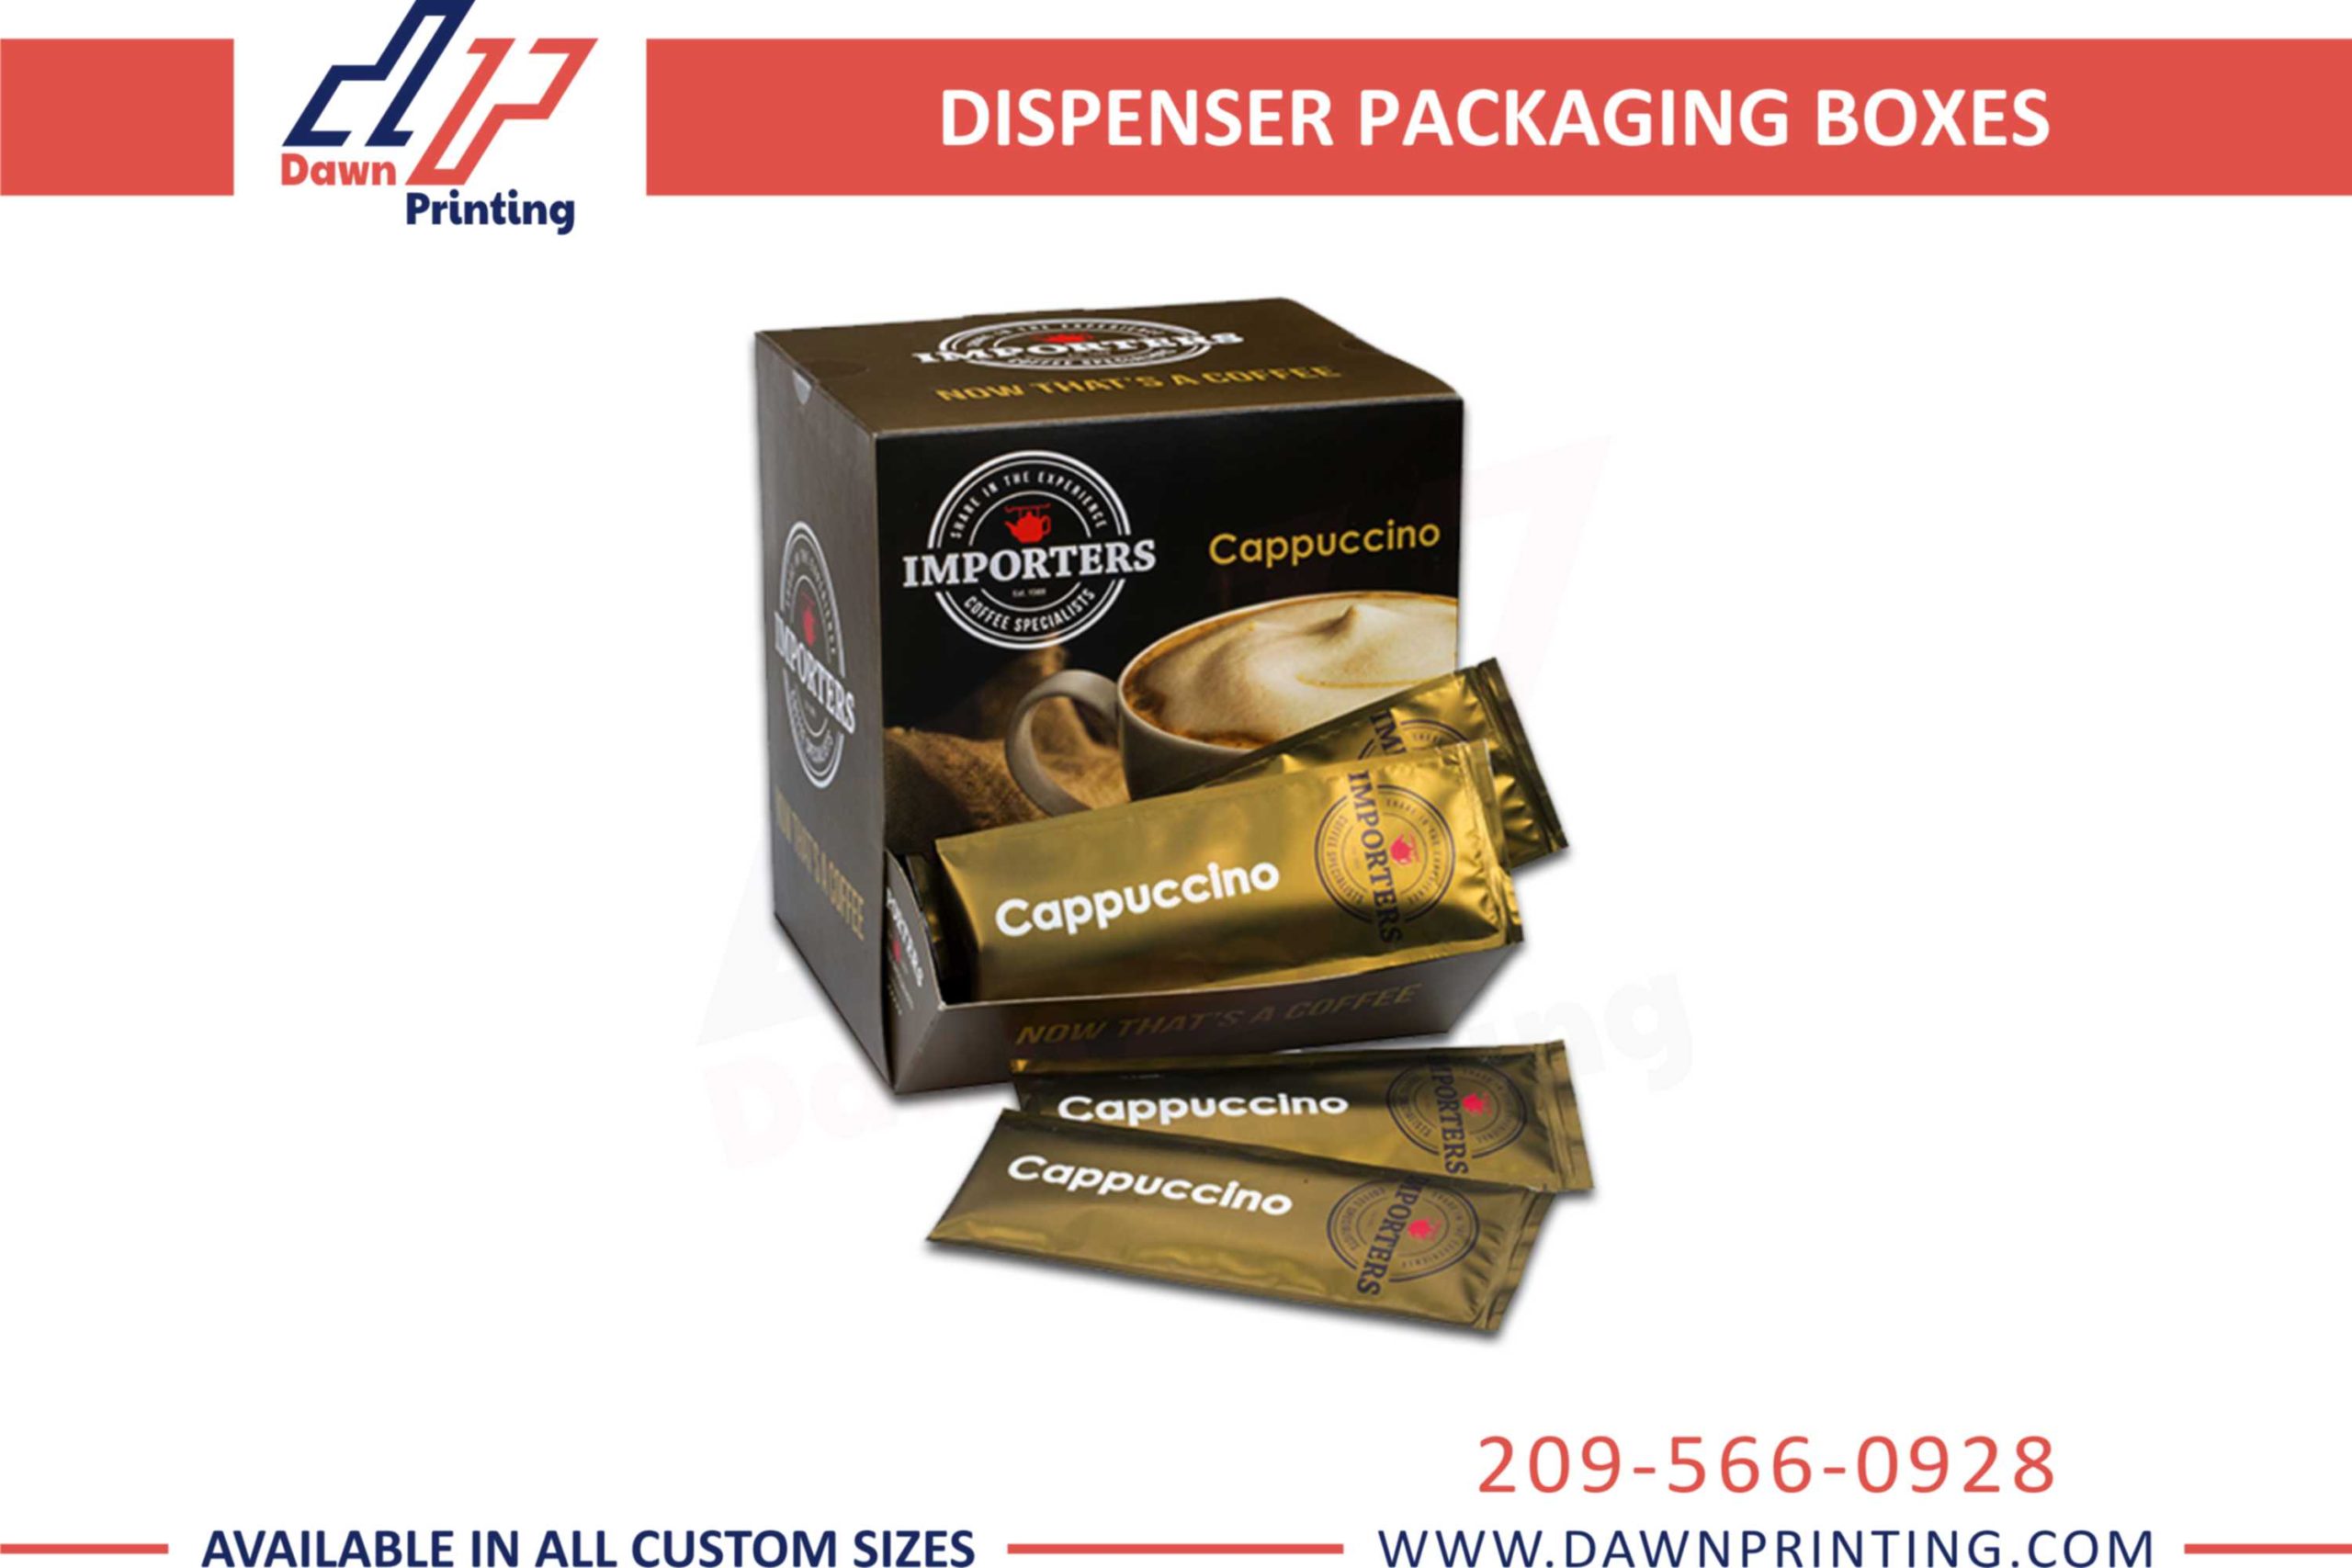 Perforated Dispenser Packaging Boxes - Dawn Printing